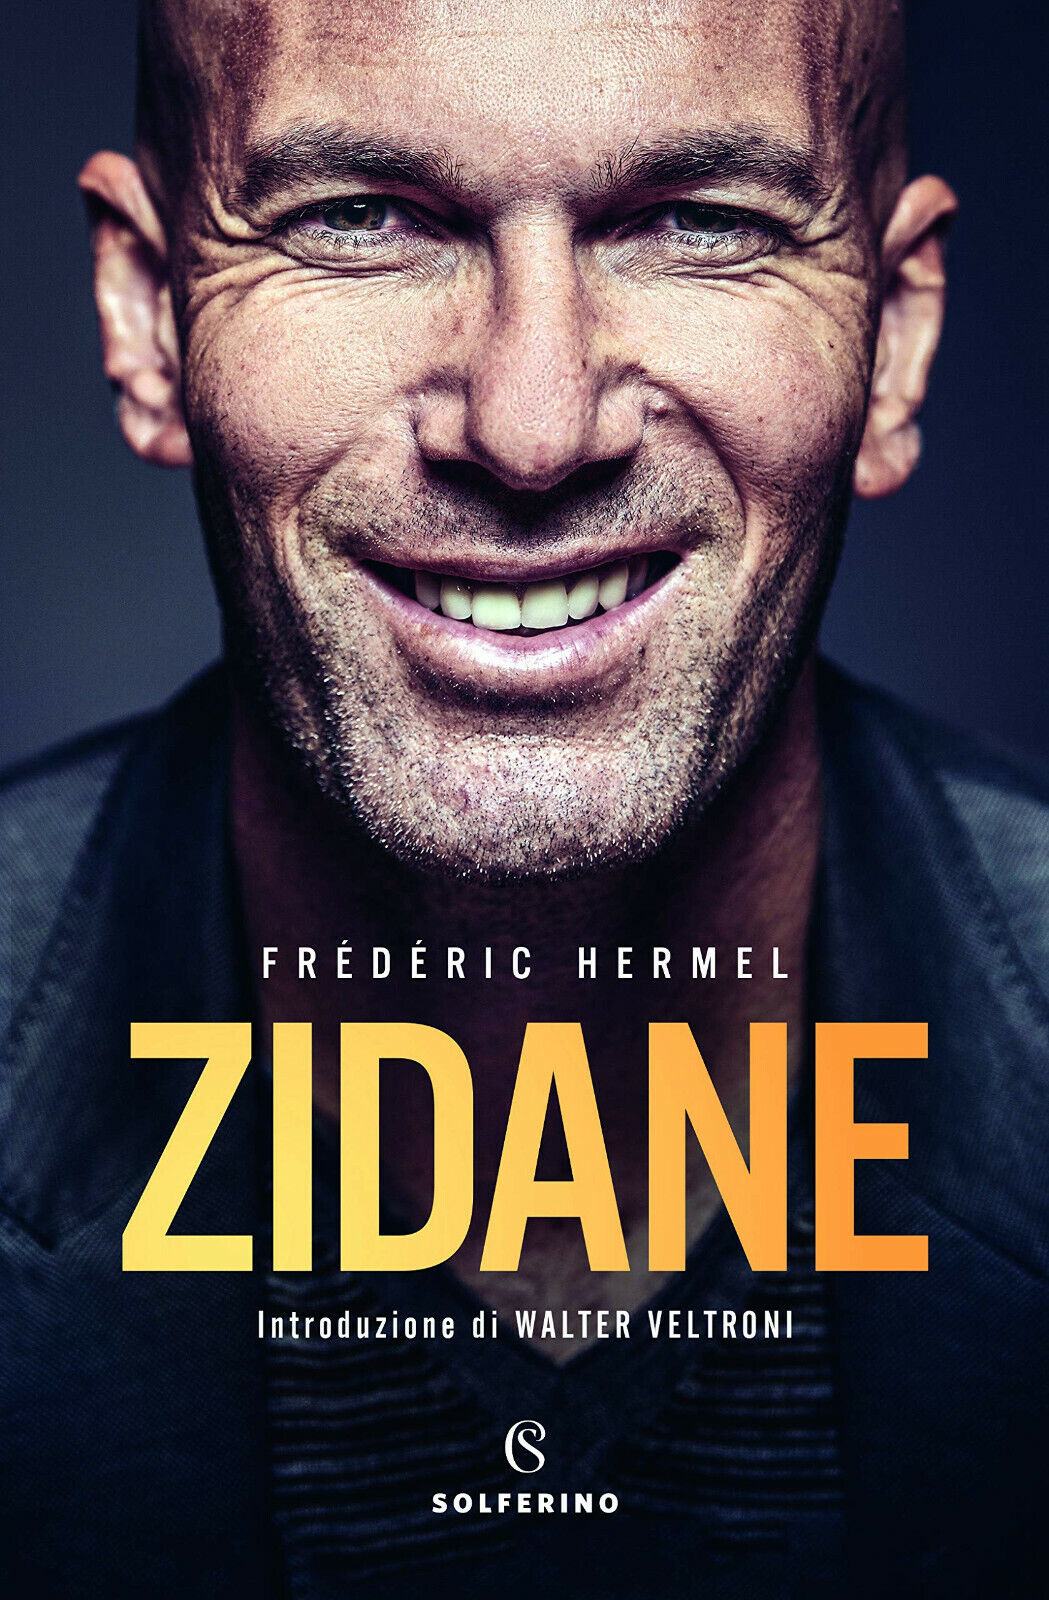 Zidane - Fr?d?ric Hermel - Solferino, 2020